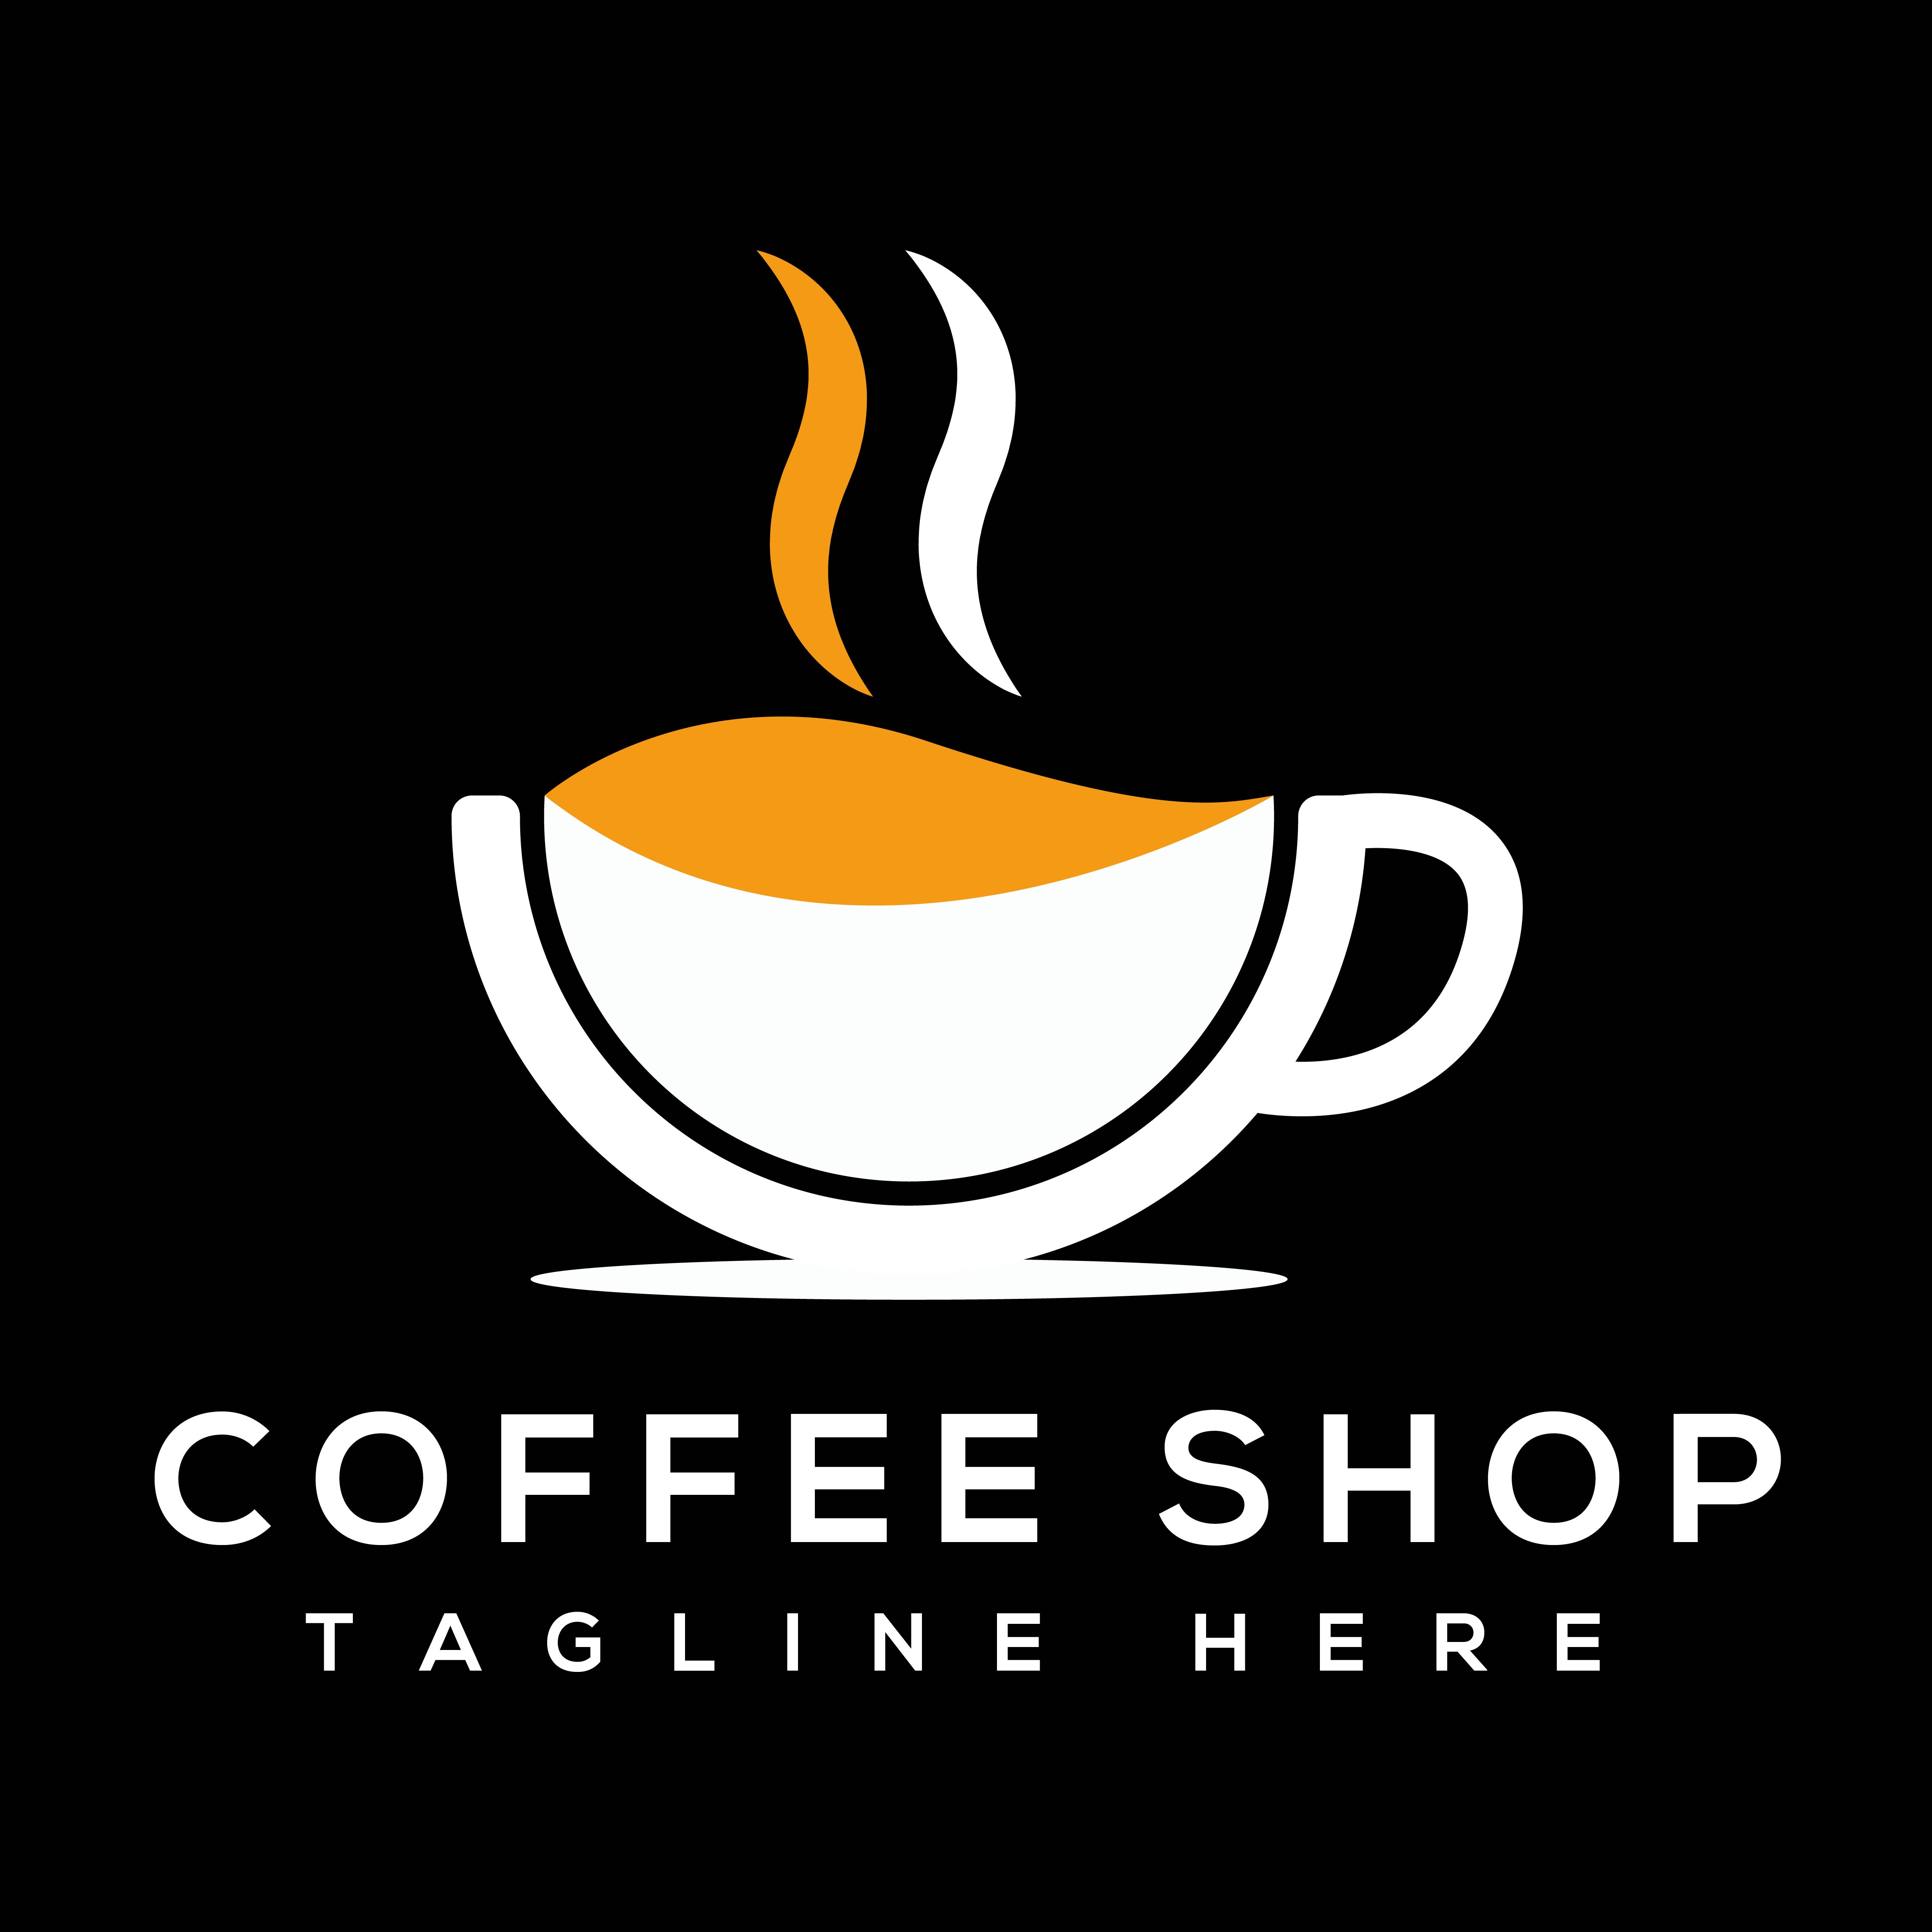 Coffee Shop Logo Design cover image.